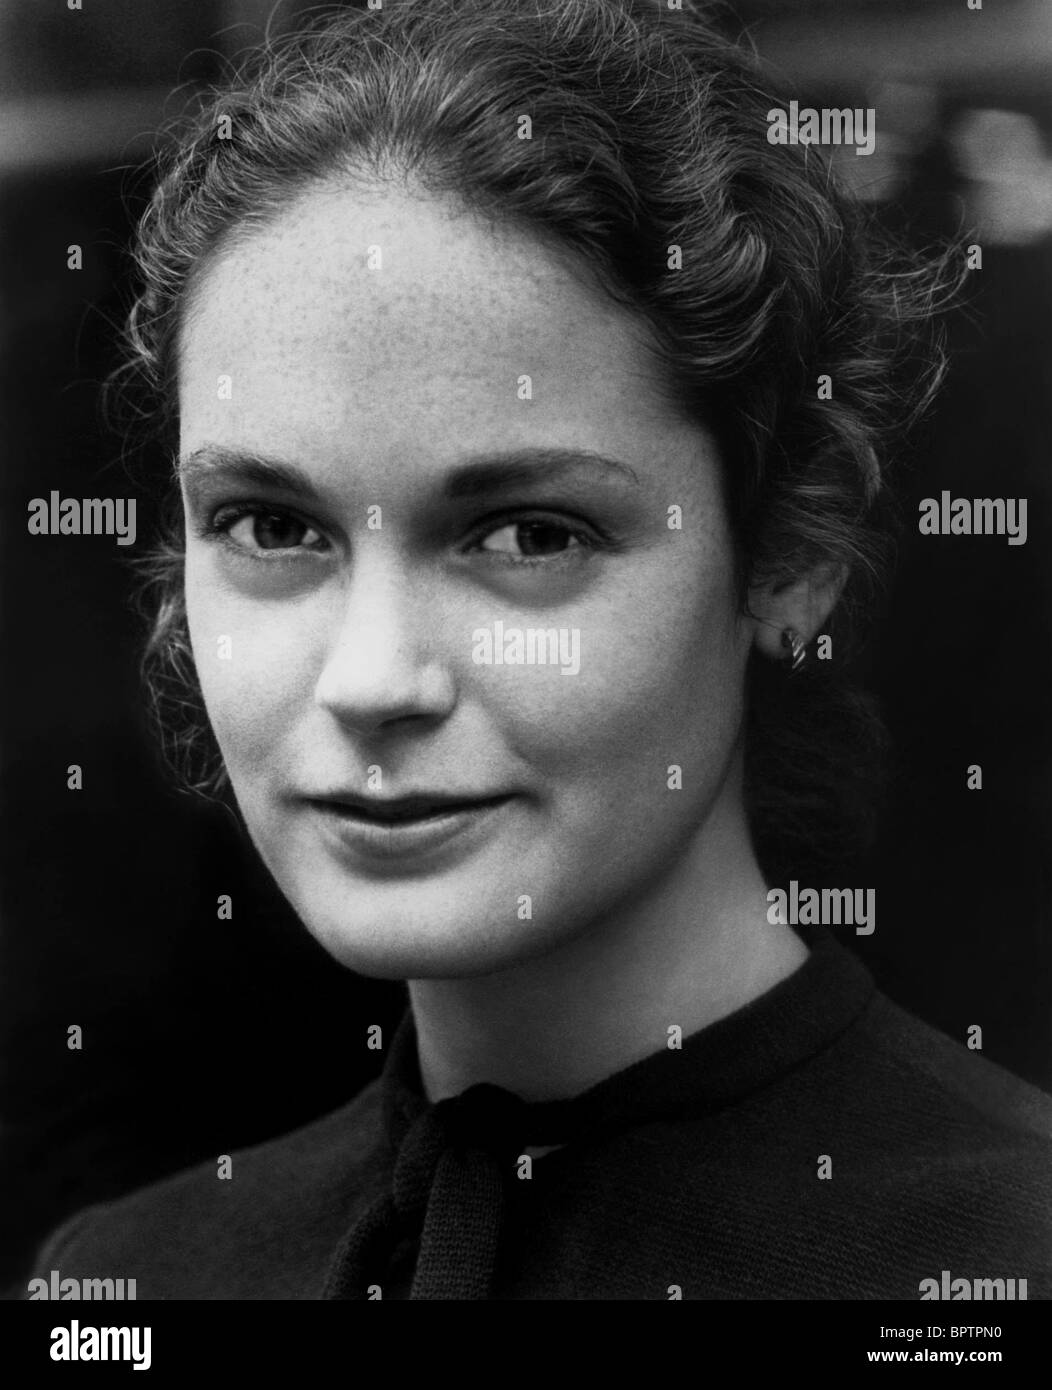 ELIZABETH HARTMAN ACTRESS (1965 Stock Photo - Alamy